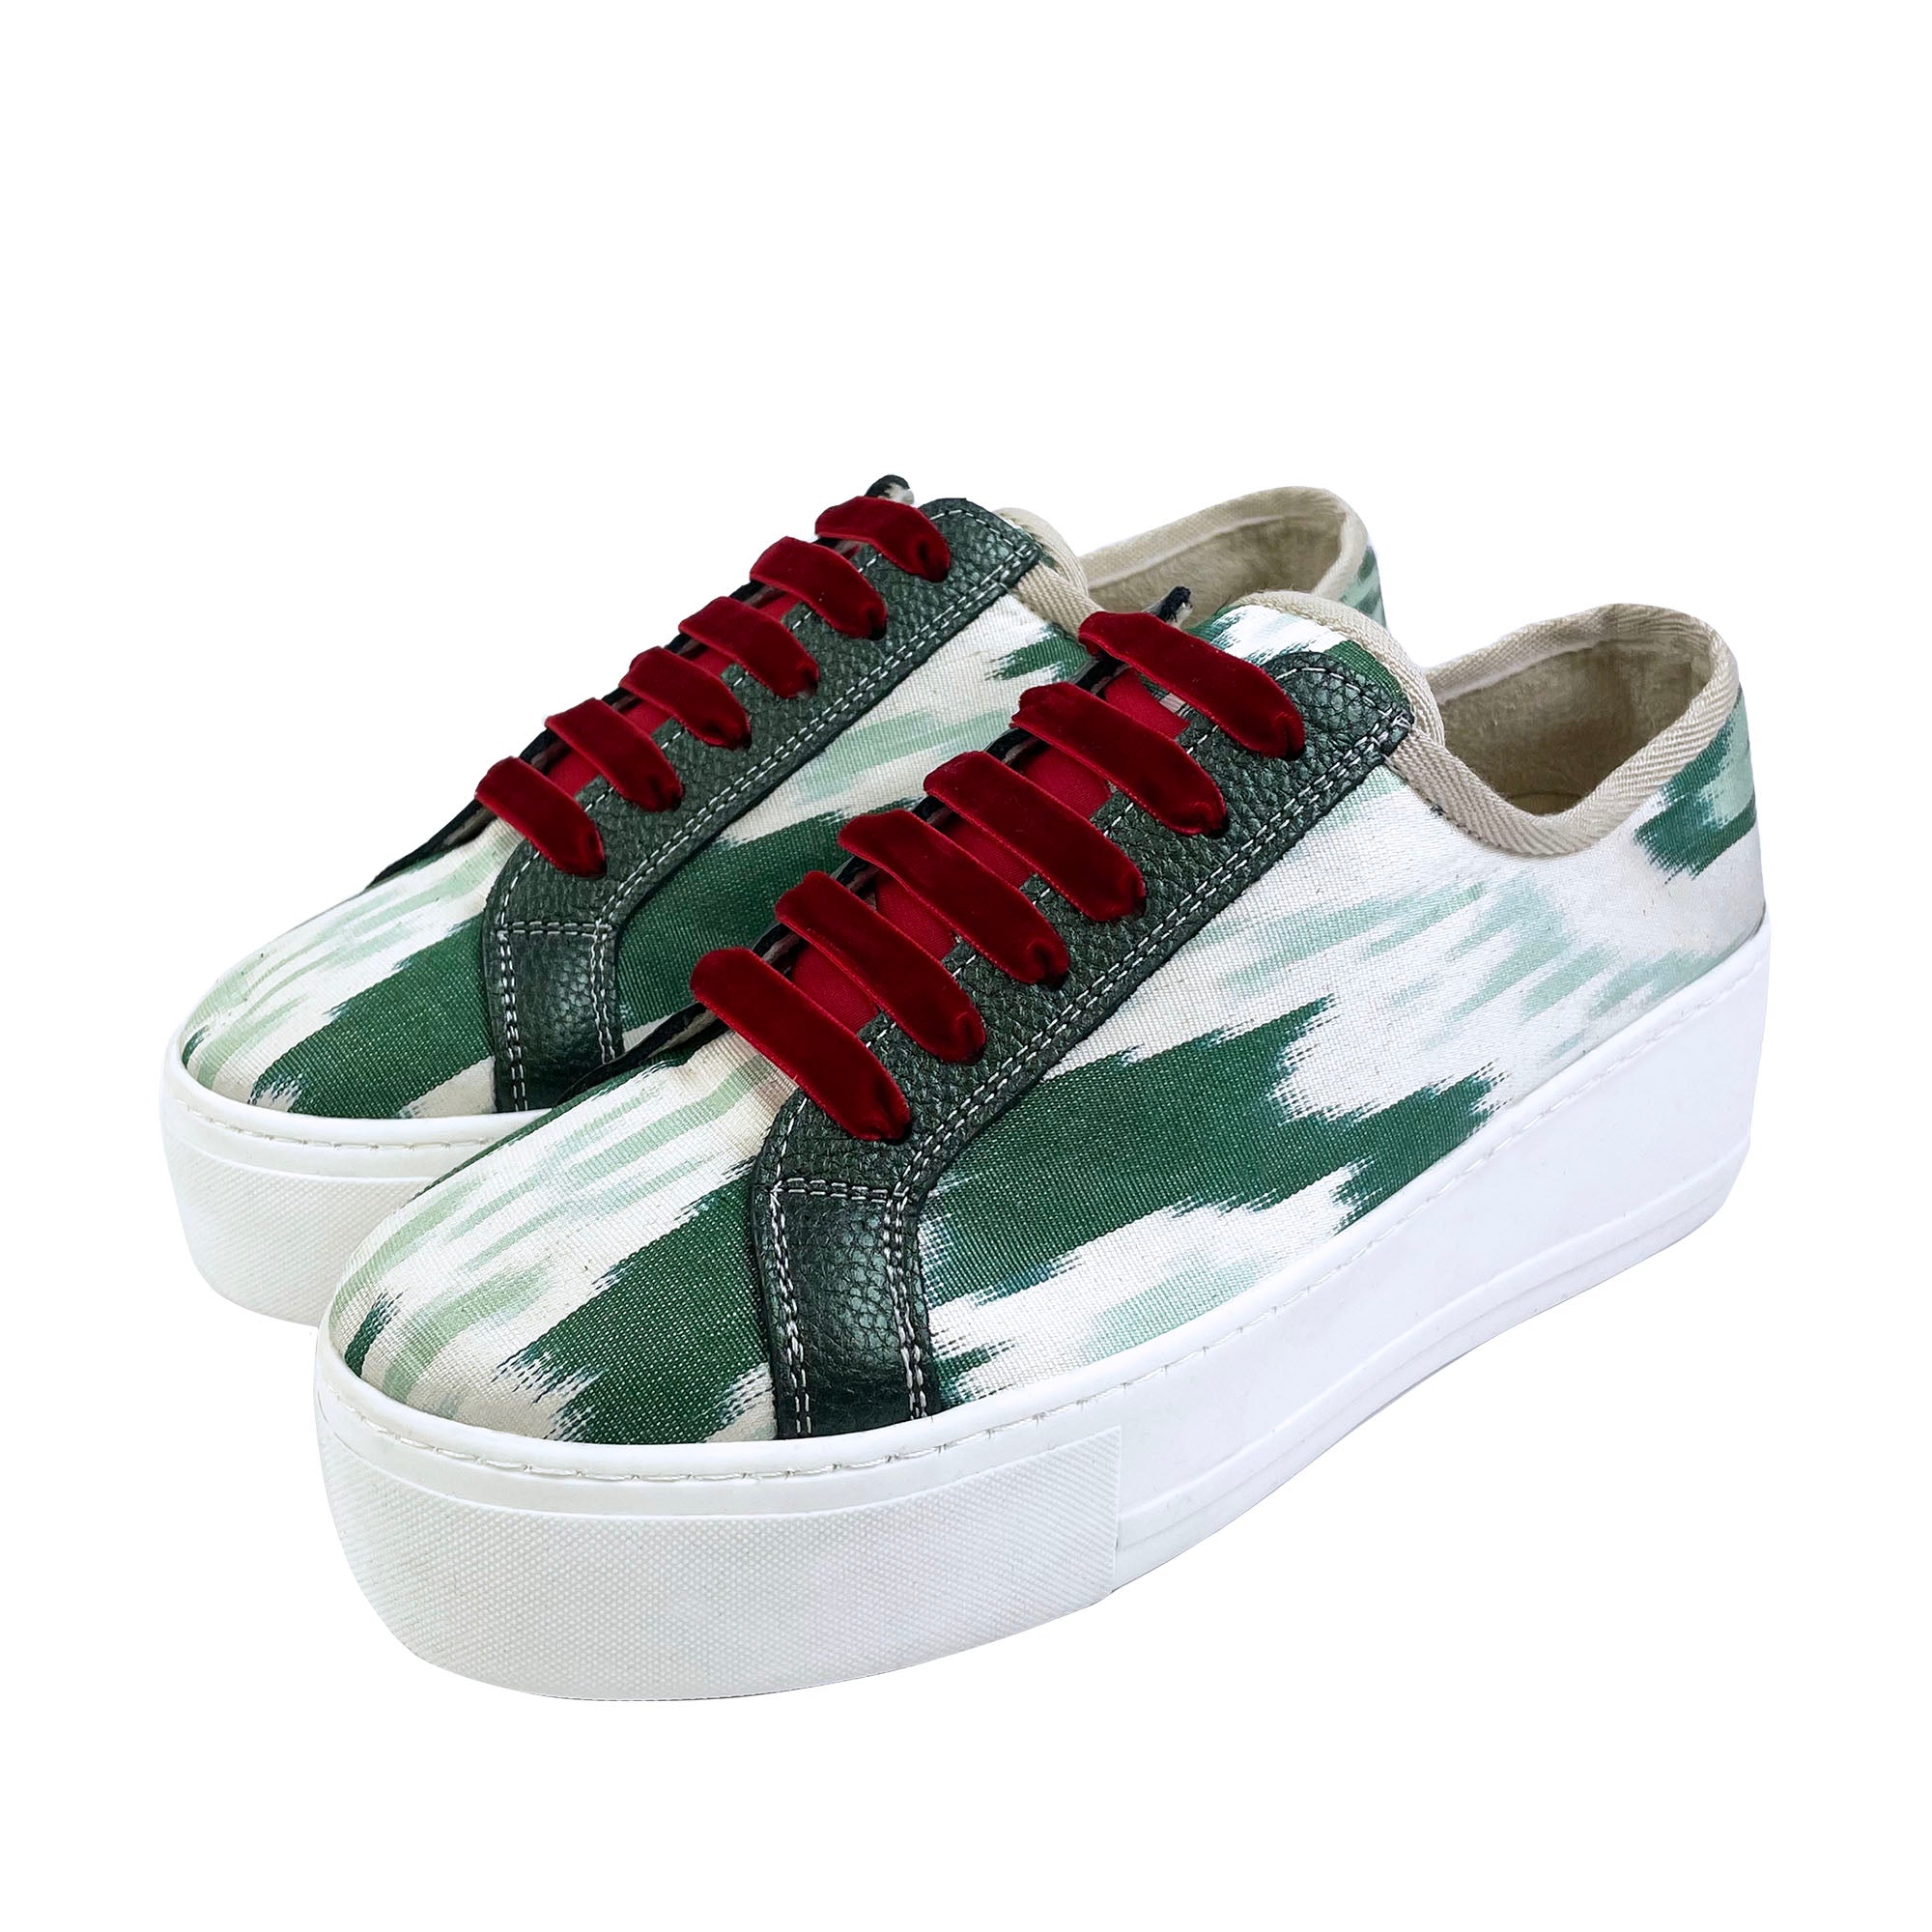 Green Ikat Silk platform sneakers with red velvet shoelaces